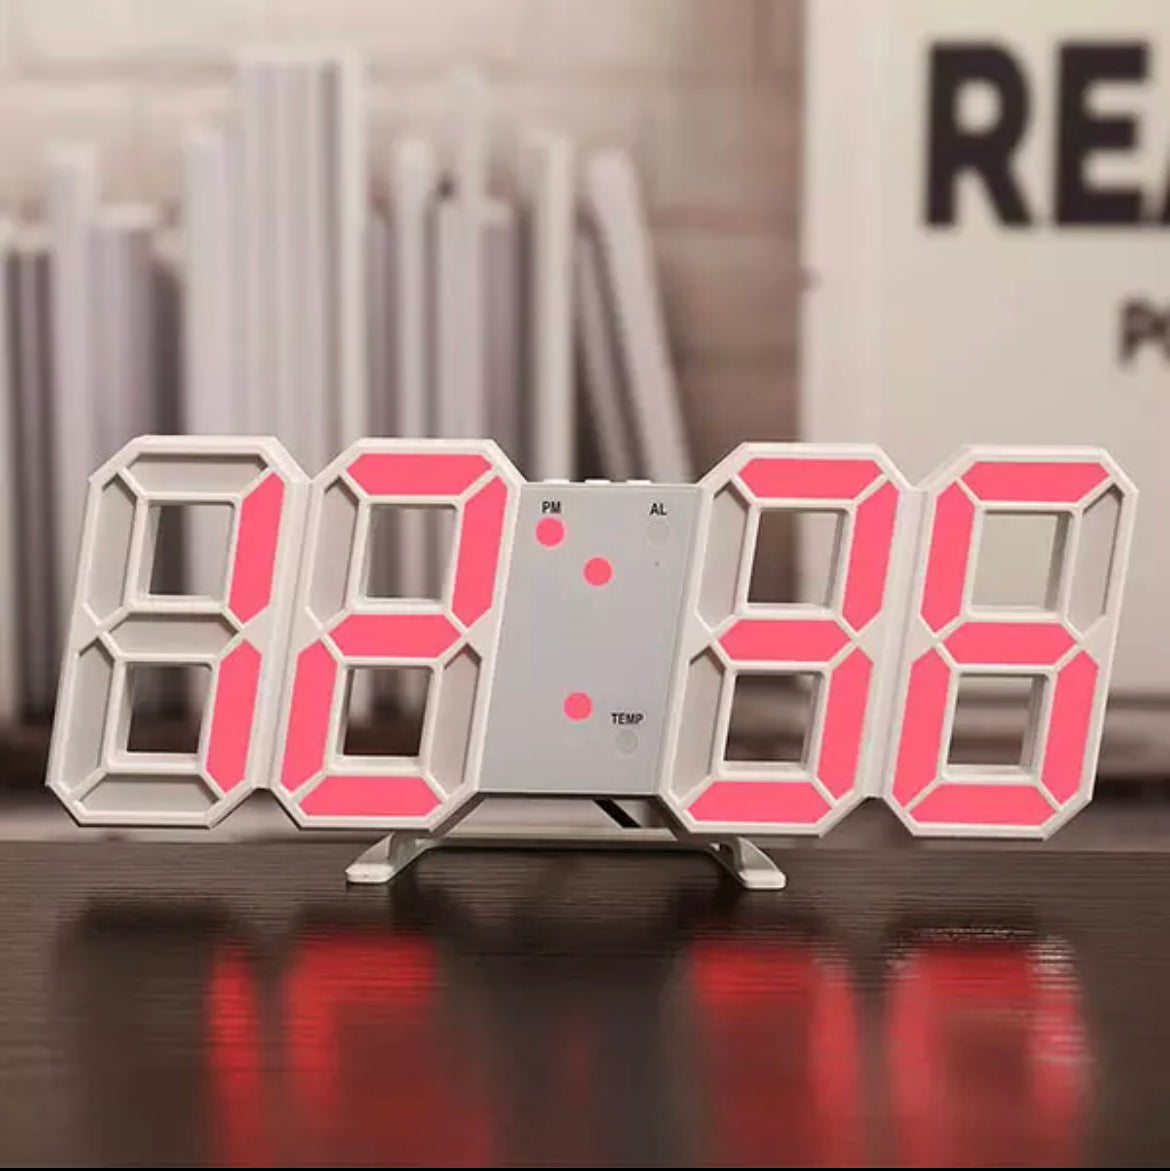 Reloj despertador digital con pantalla de 4,6 pulgadas led